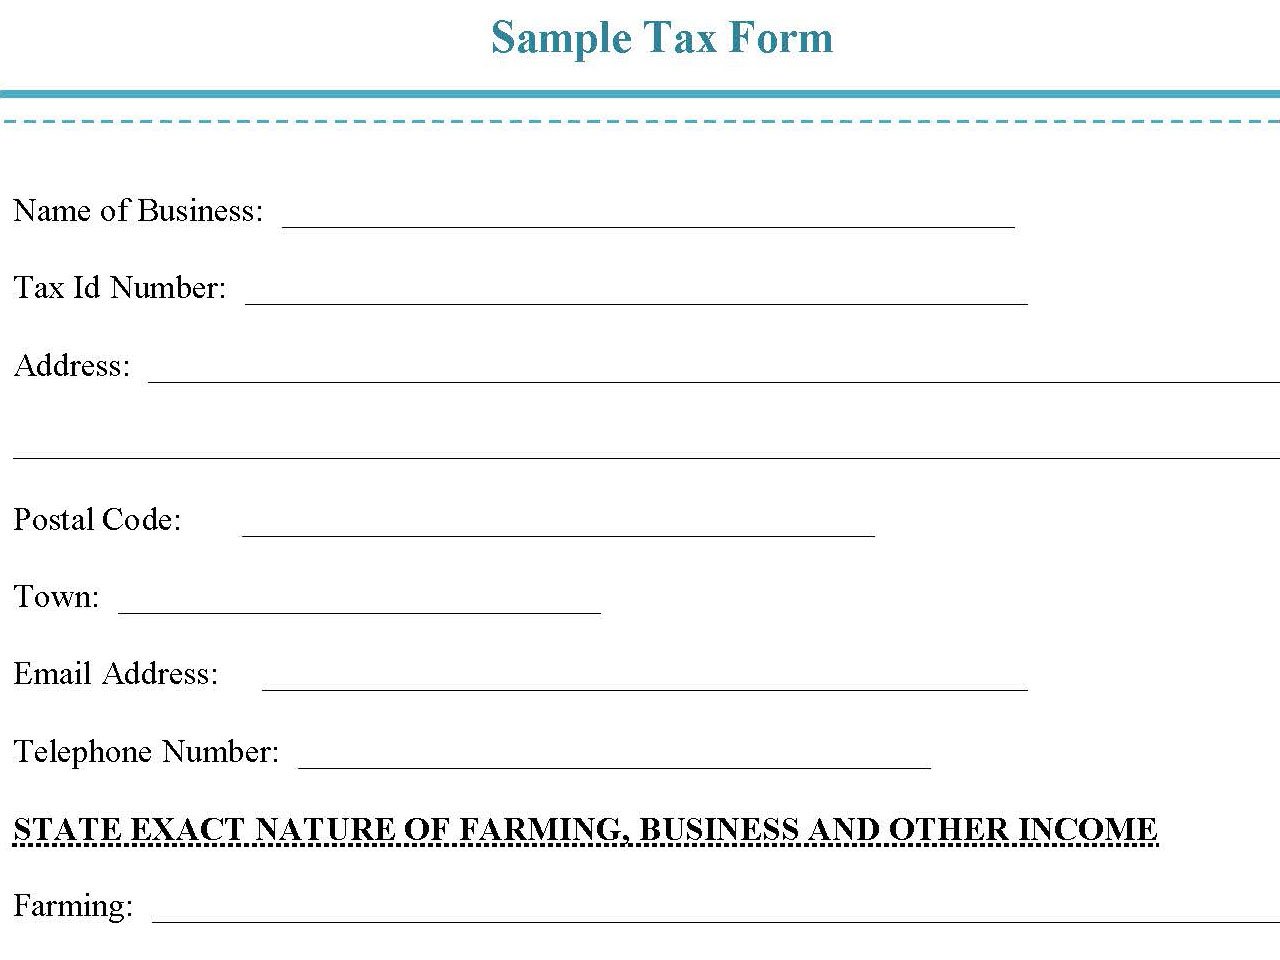 Sample Tax Form